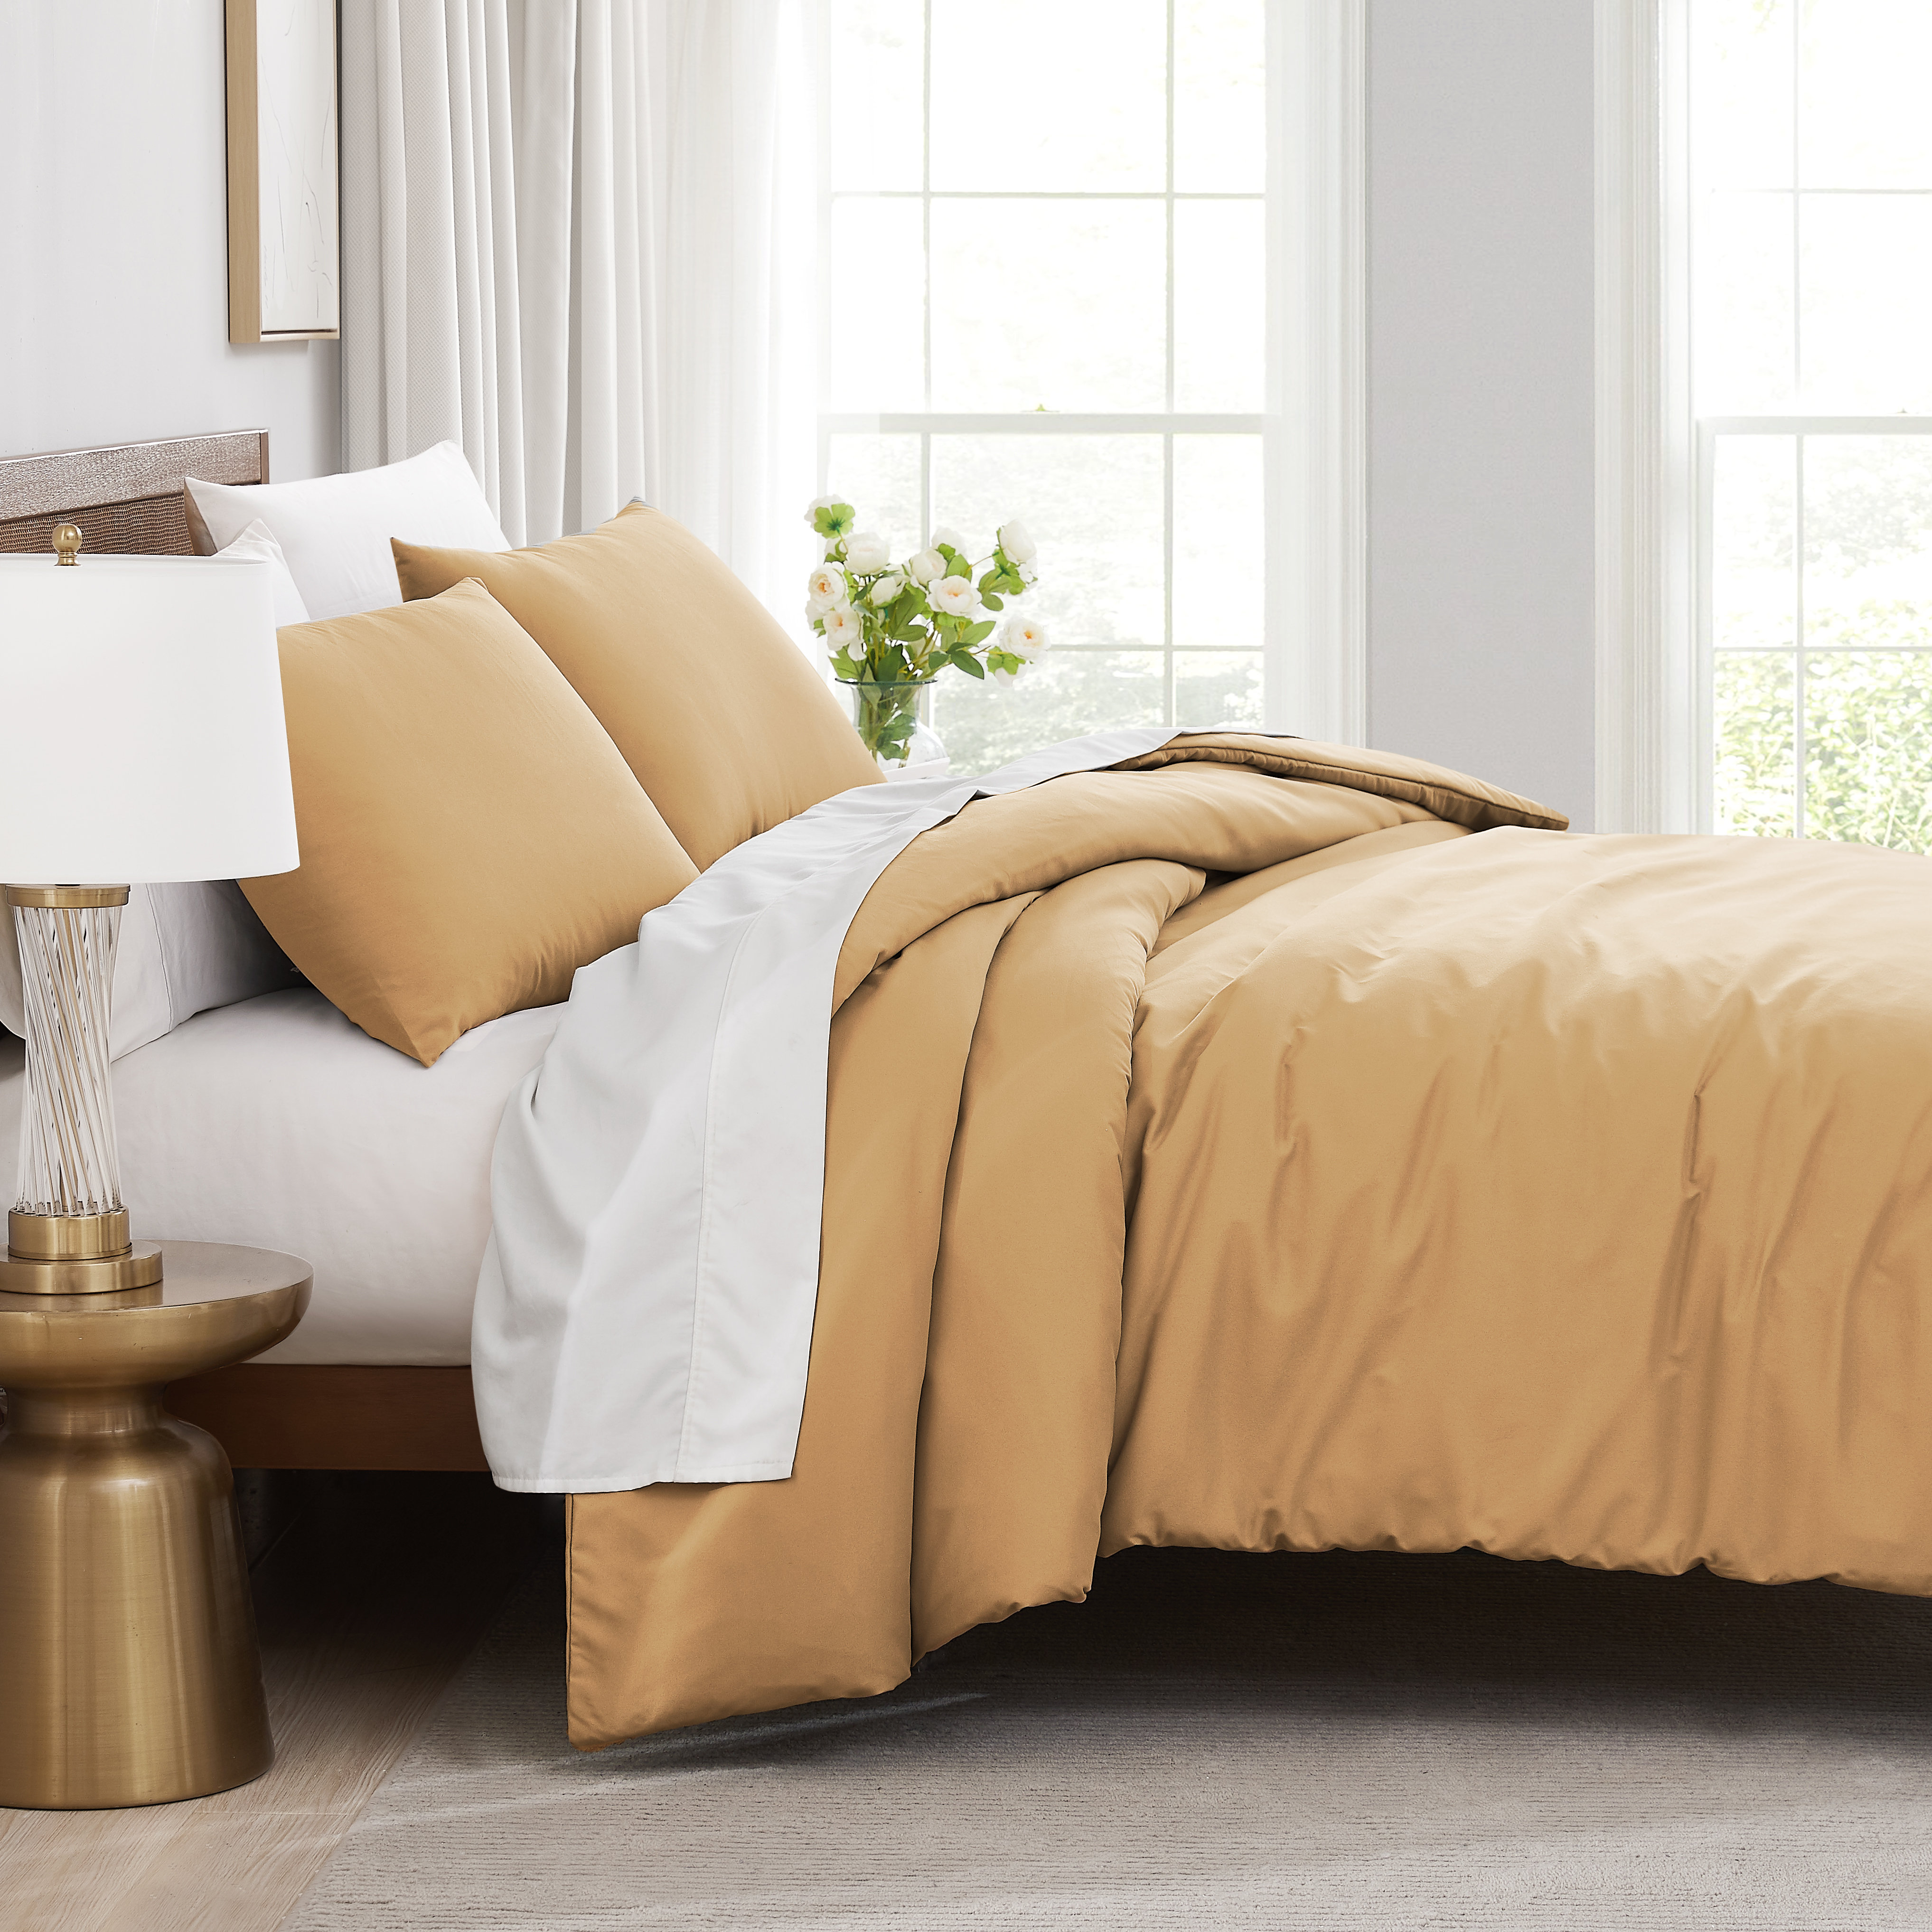 Details about   Golden Rang Duvet Quilt Cover with Pillow Cases Cotton Rich Bedding Sets 